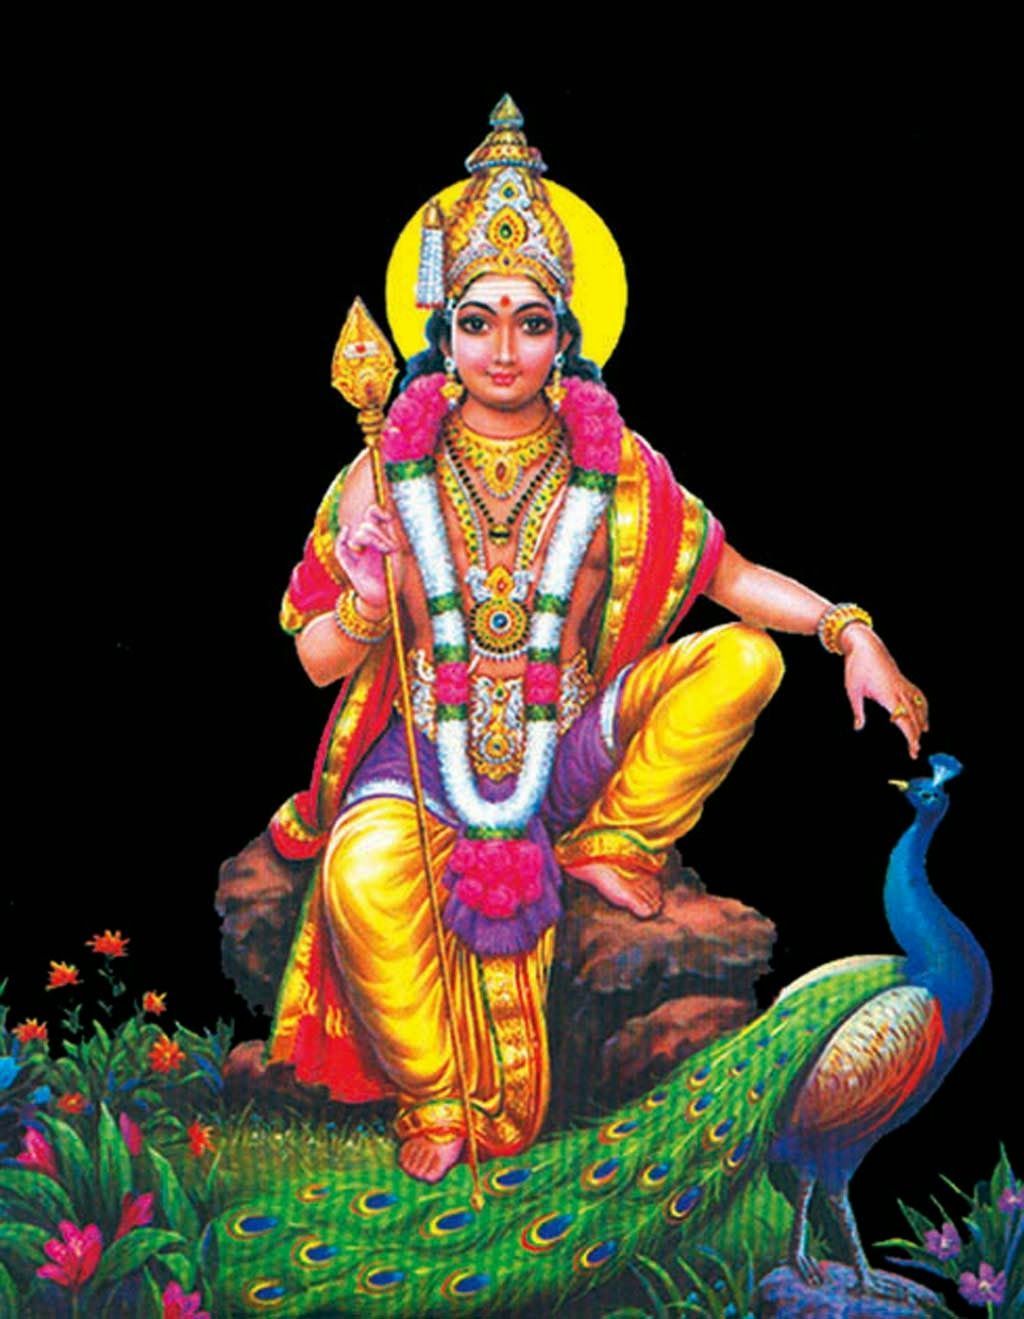 hindu lord murugan HD wallpaper image picture photo. Lord